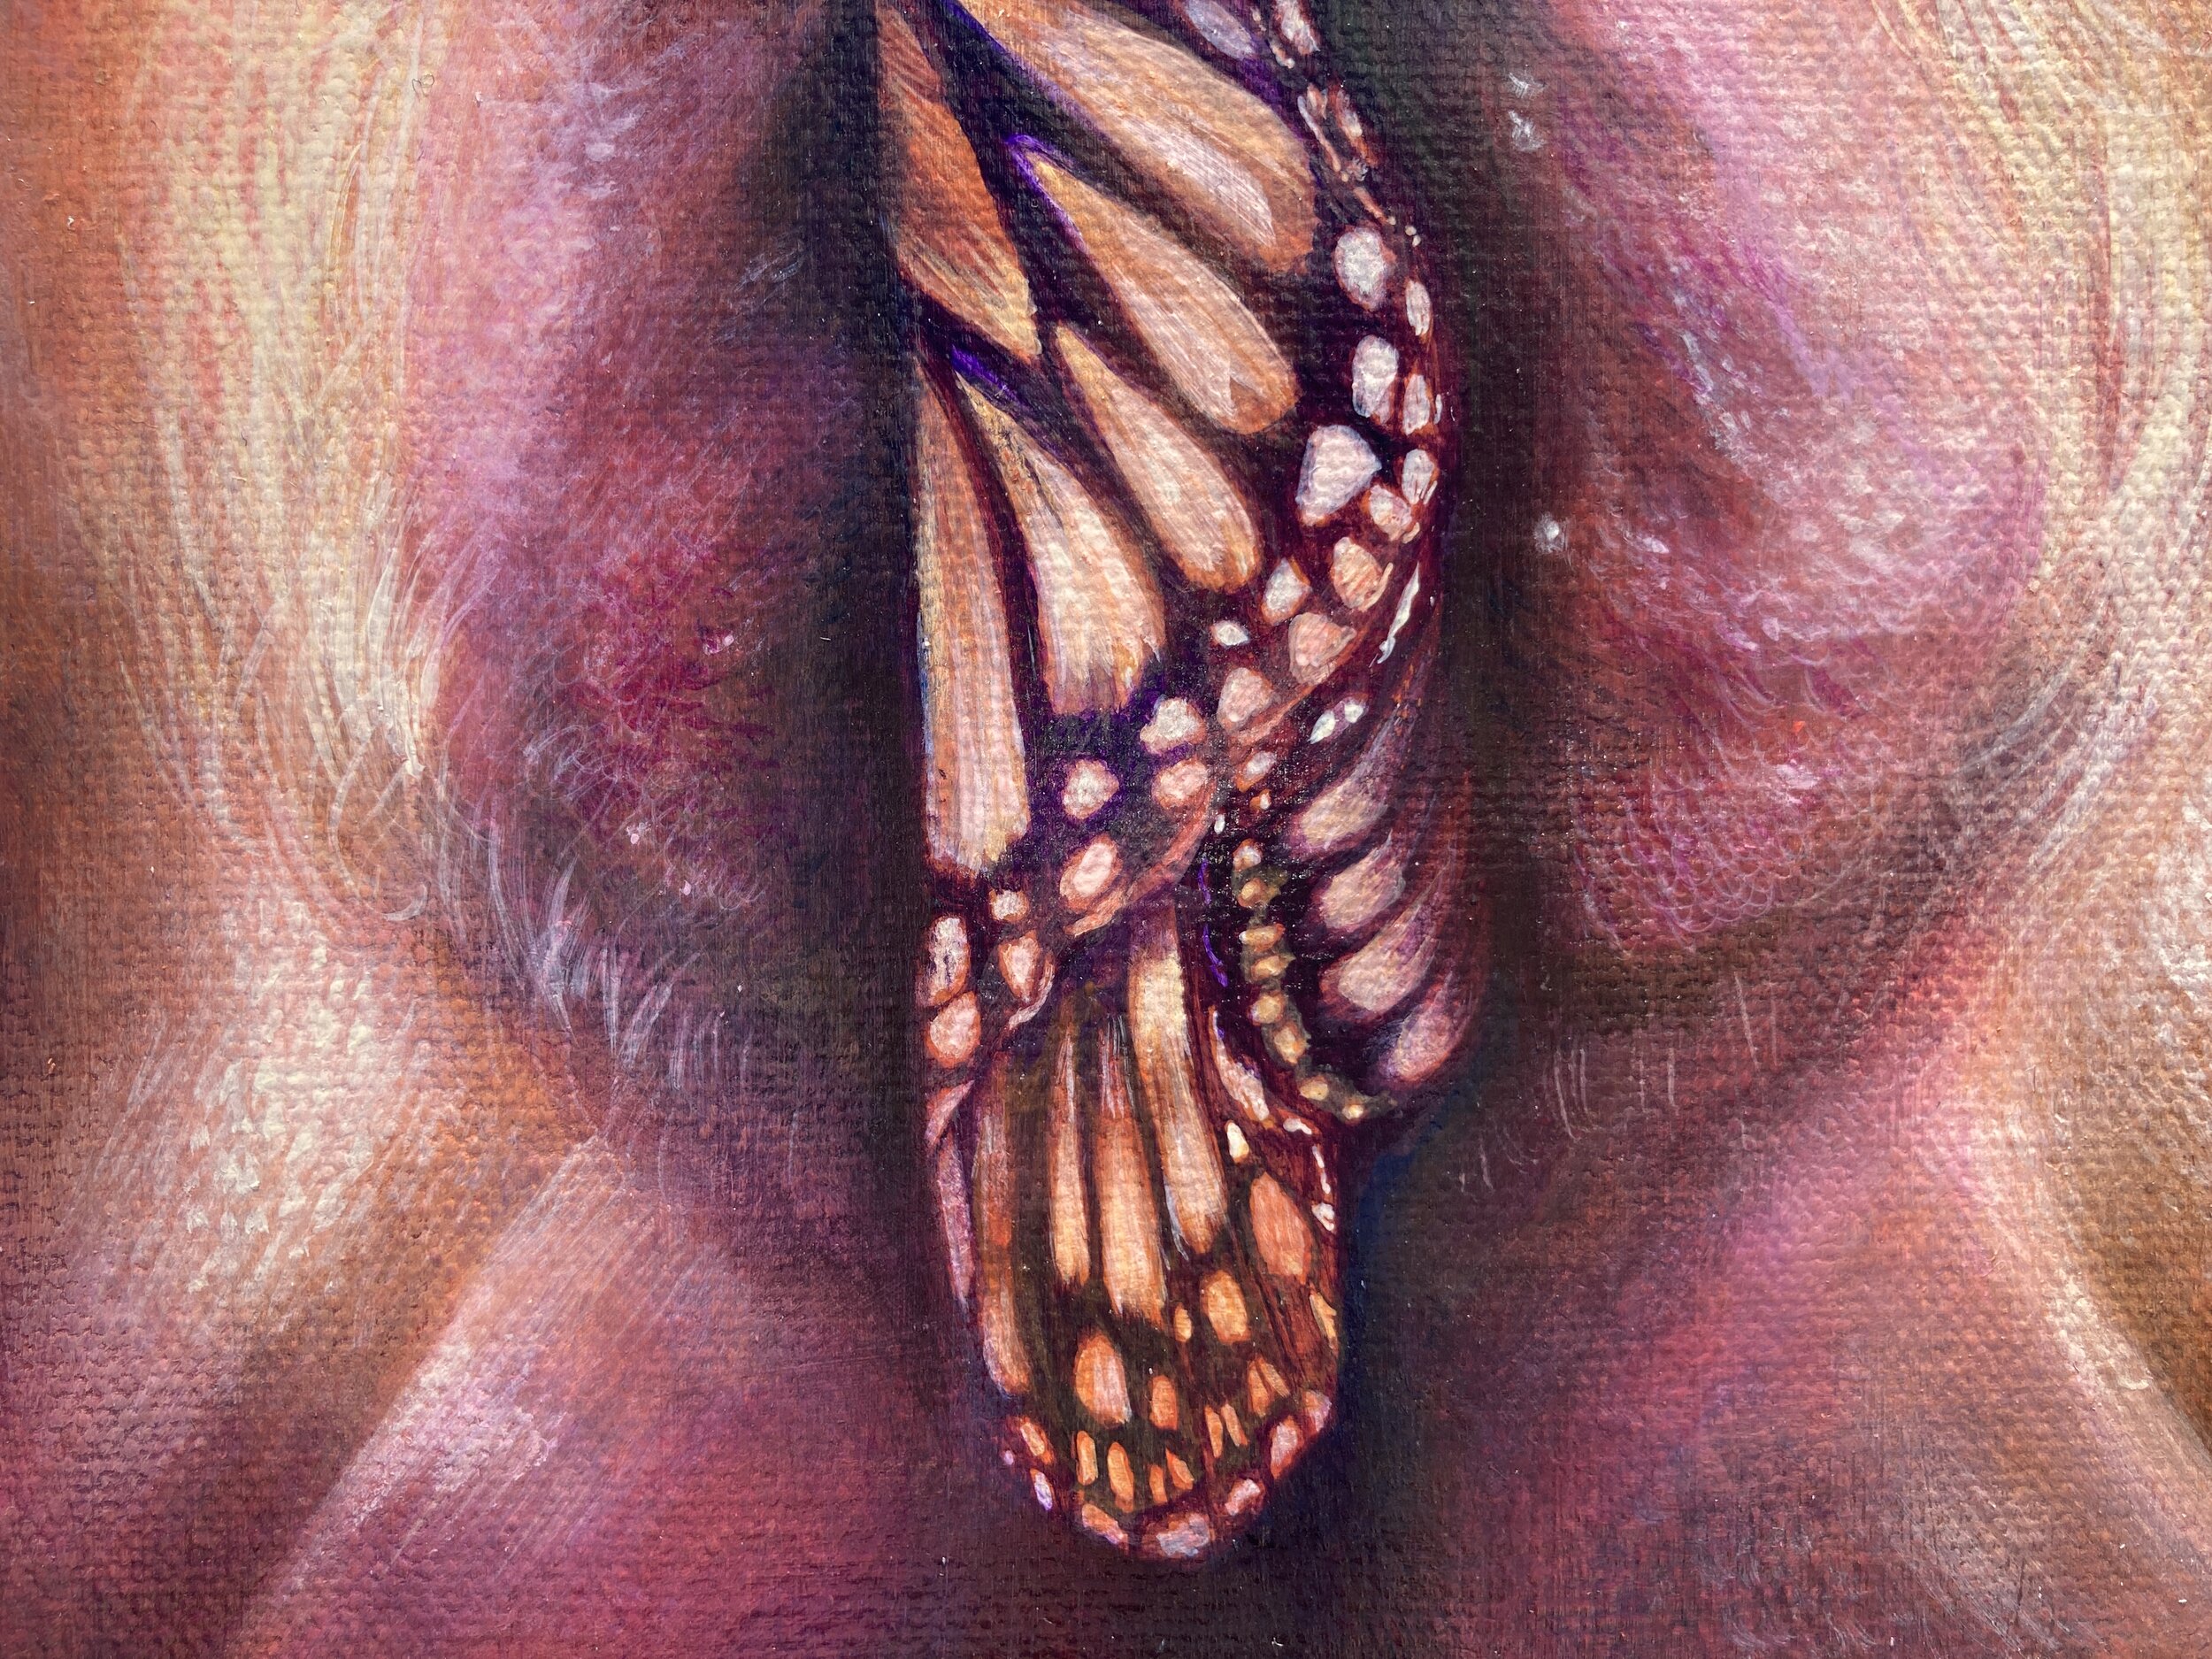 detail, Papilionoidea Yoni Fig. 7